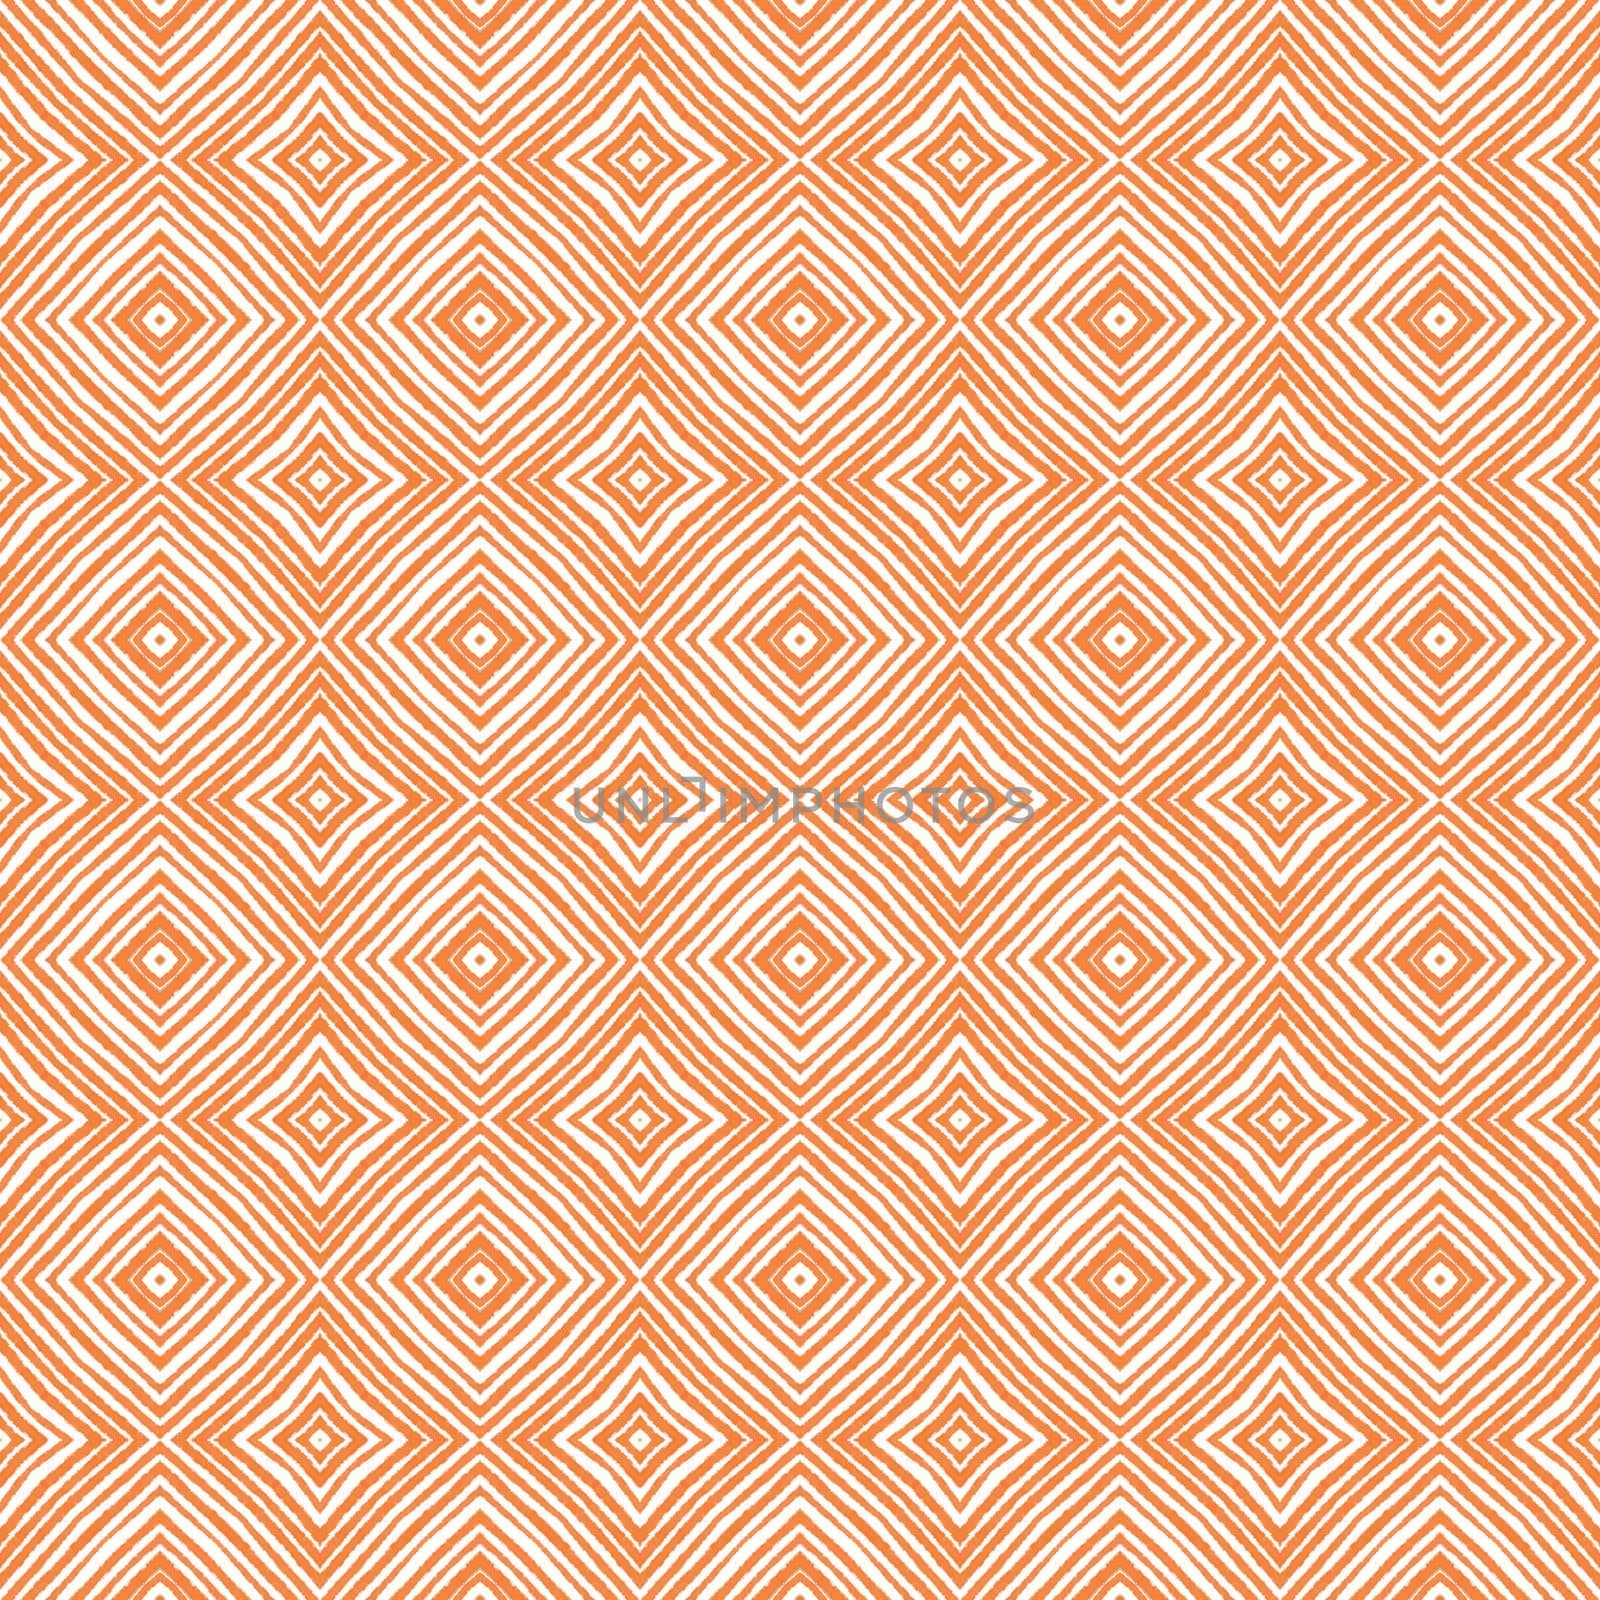 Chevron stripes design. Orange symmetrical kaleidoscope background. Geometric chevron stripes pattern. Textile ready sublime print, swimwear fabric, wallpaper, wrapping.